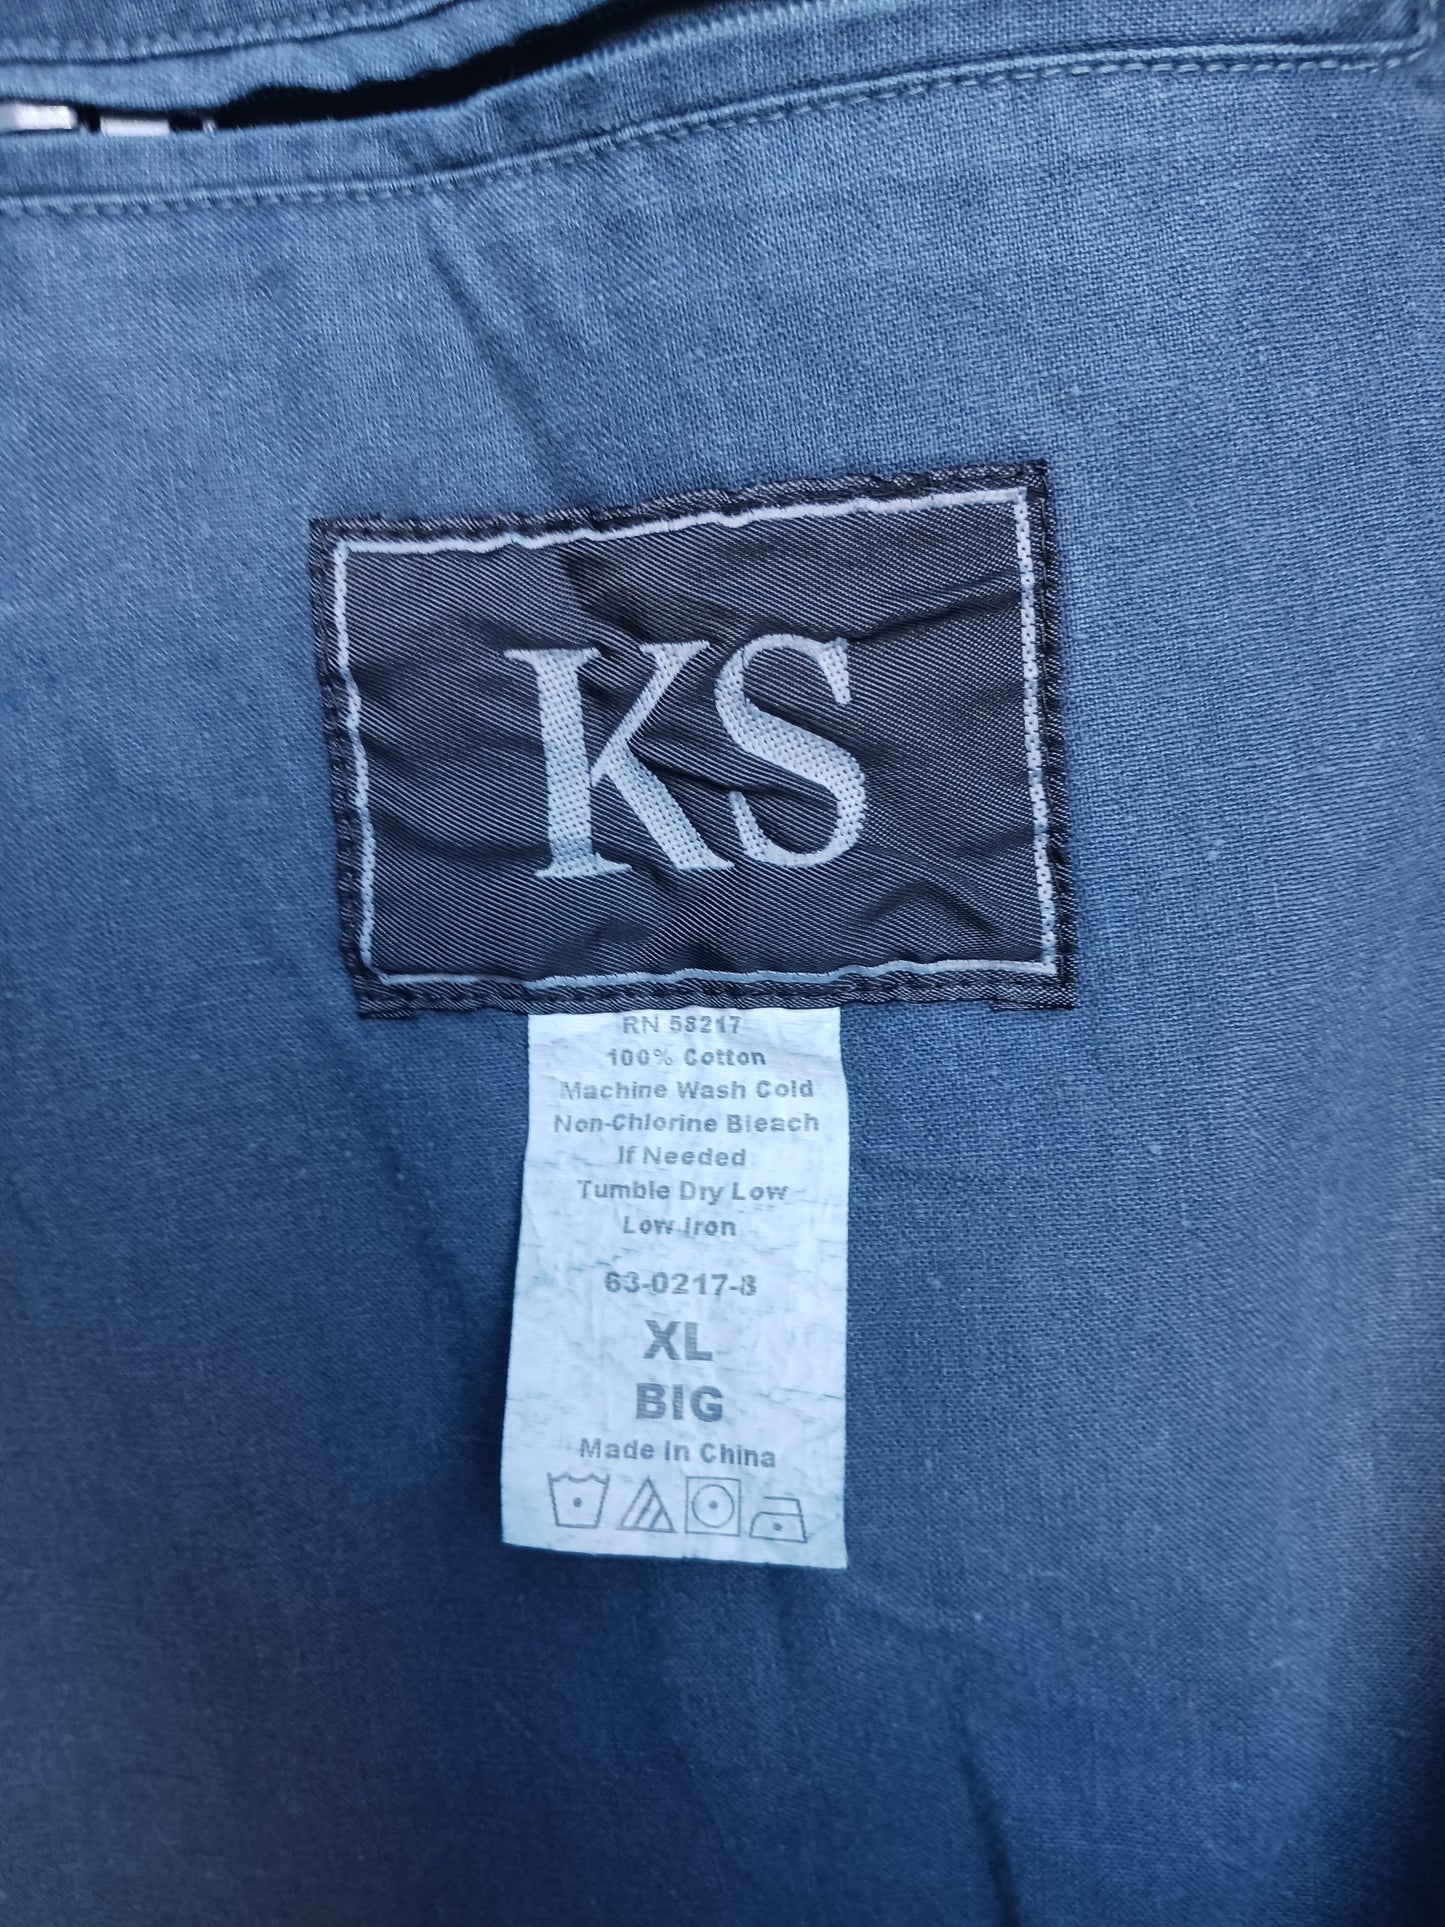 KS Mens Blue Jacket, Size XL BIG